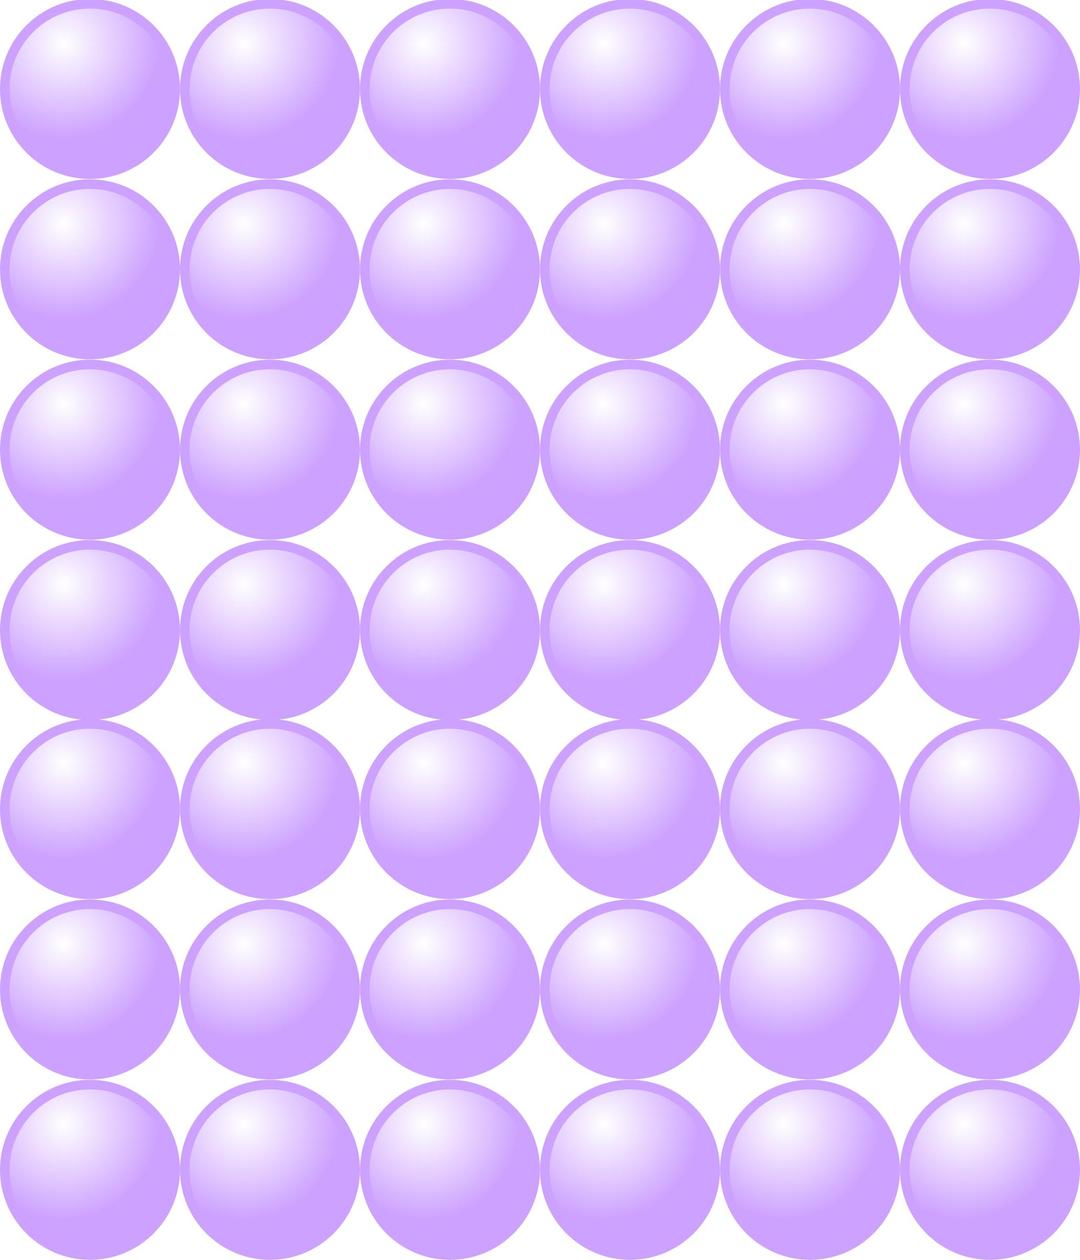 Beads quantitative picture for multiplication 7x6 png transparent